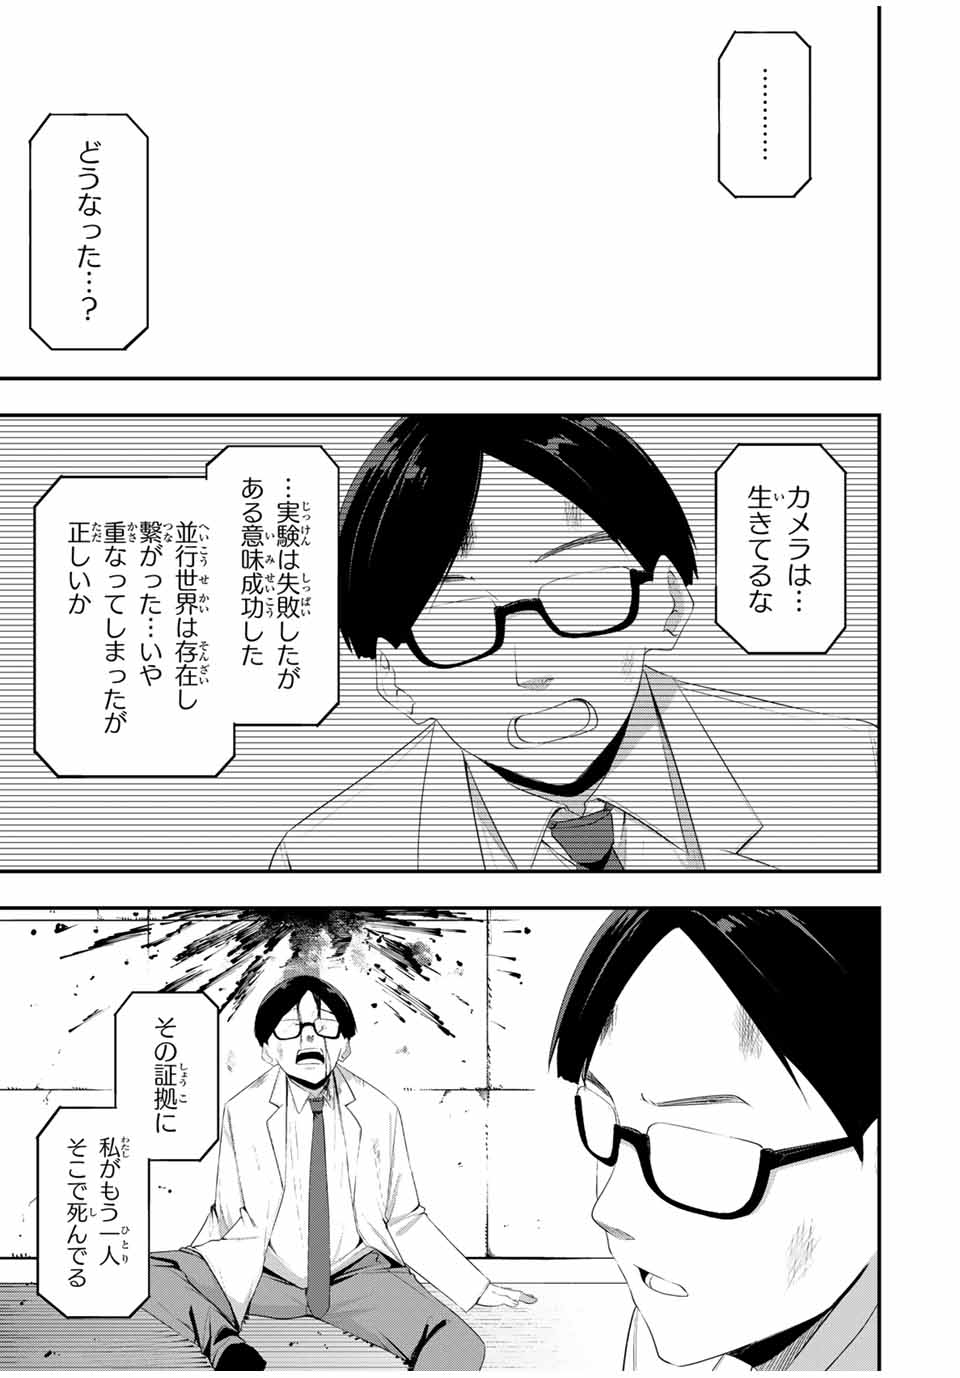 Heroine wa xx Okasegitai - Chapter 15 - Page 2